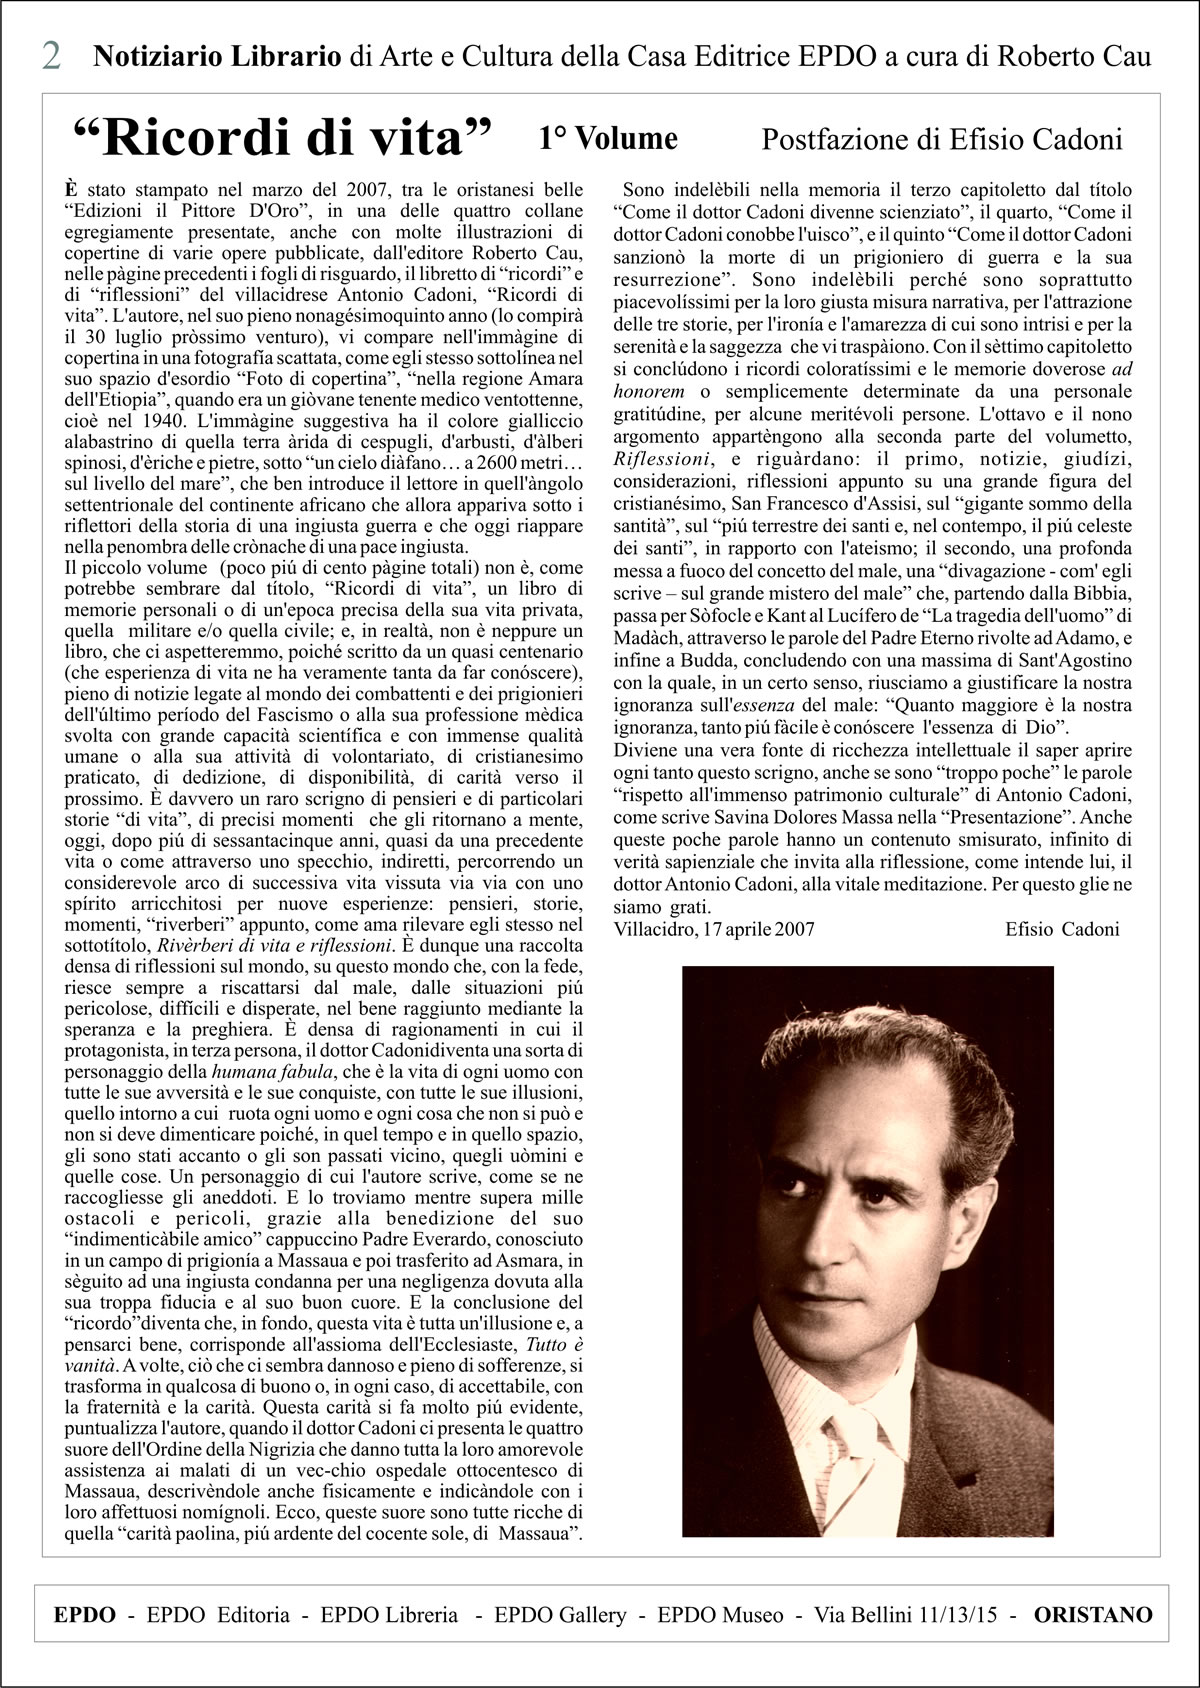 Notiziario Librairio EPDO - Antonio Cadoni